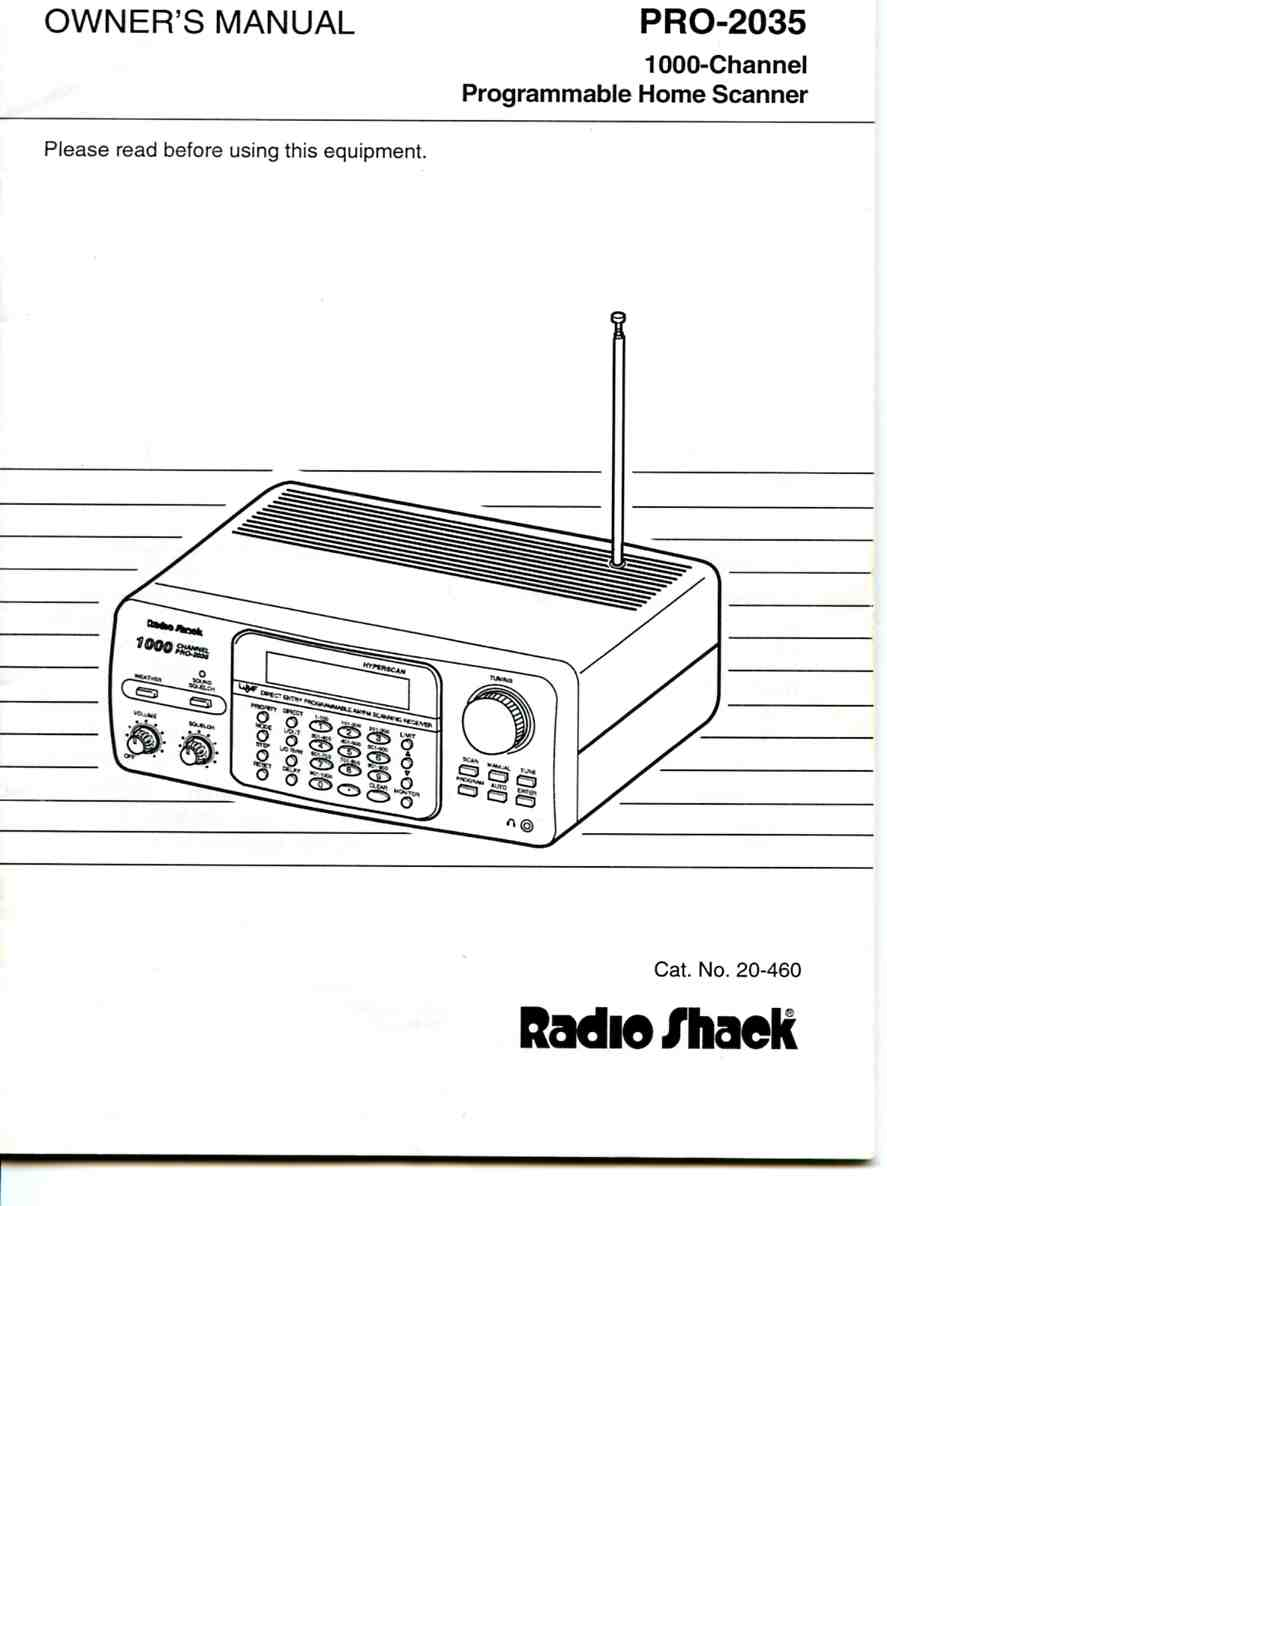 Radio Shack Pro-2035 User Manual